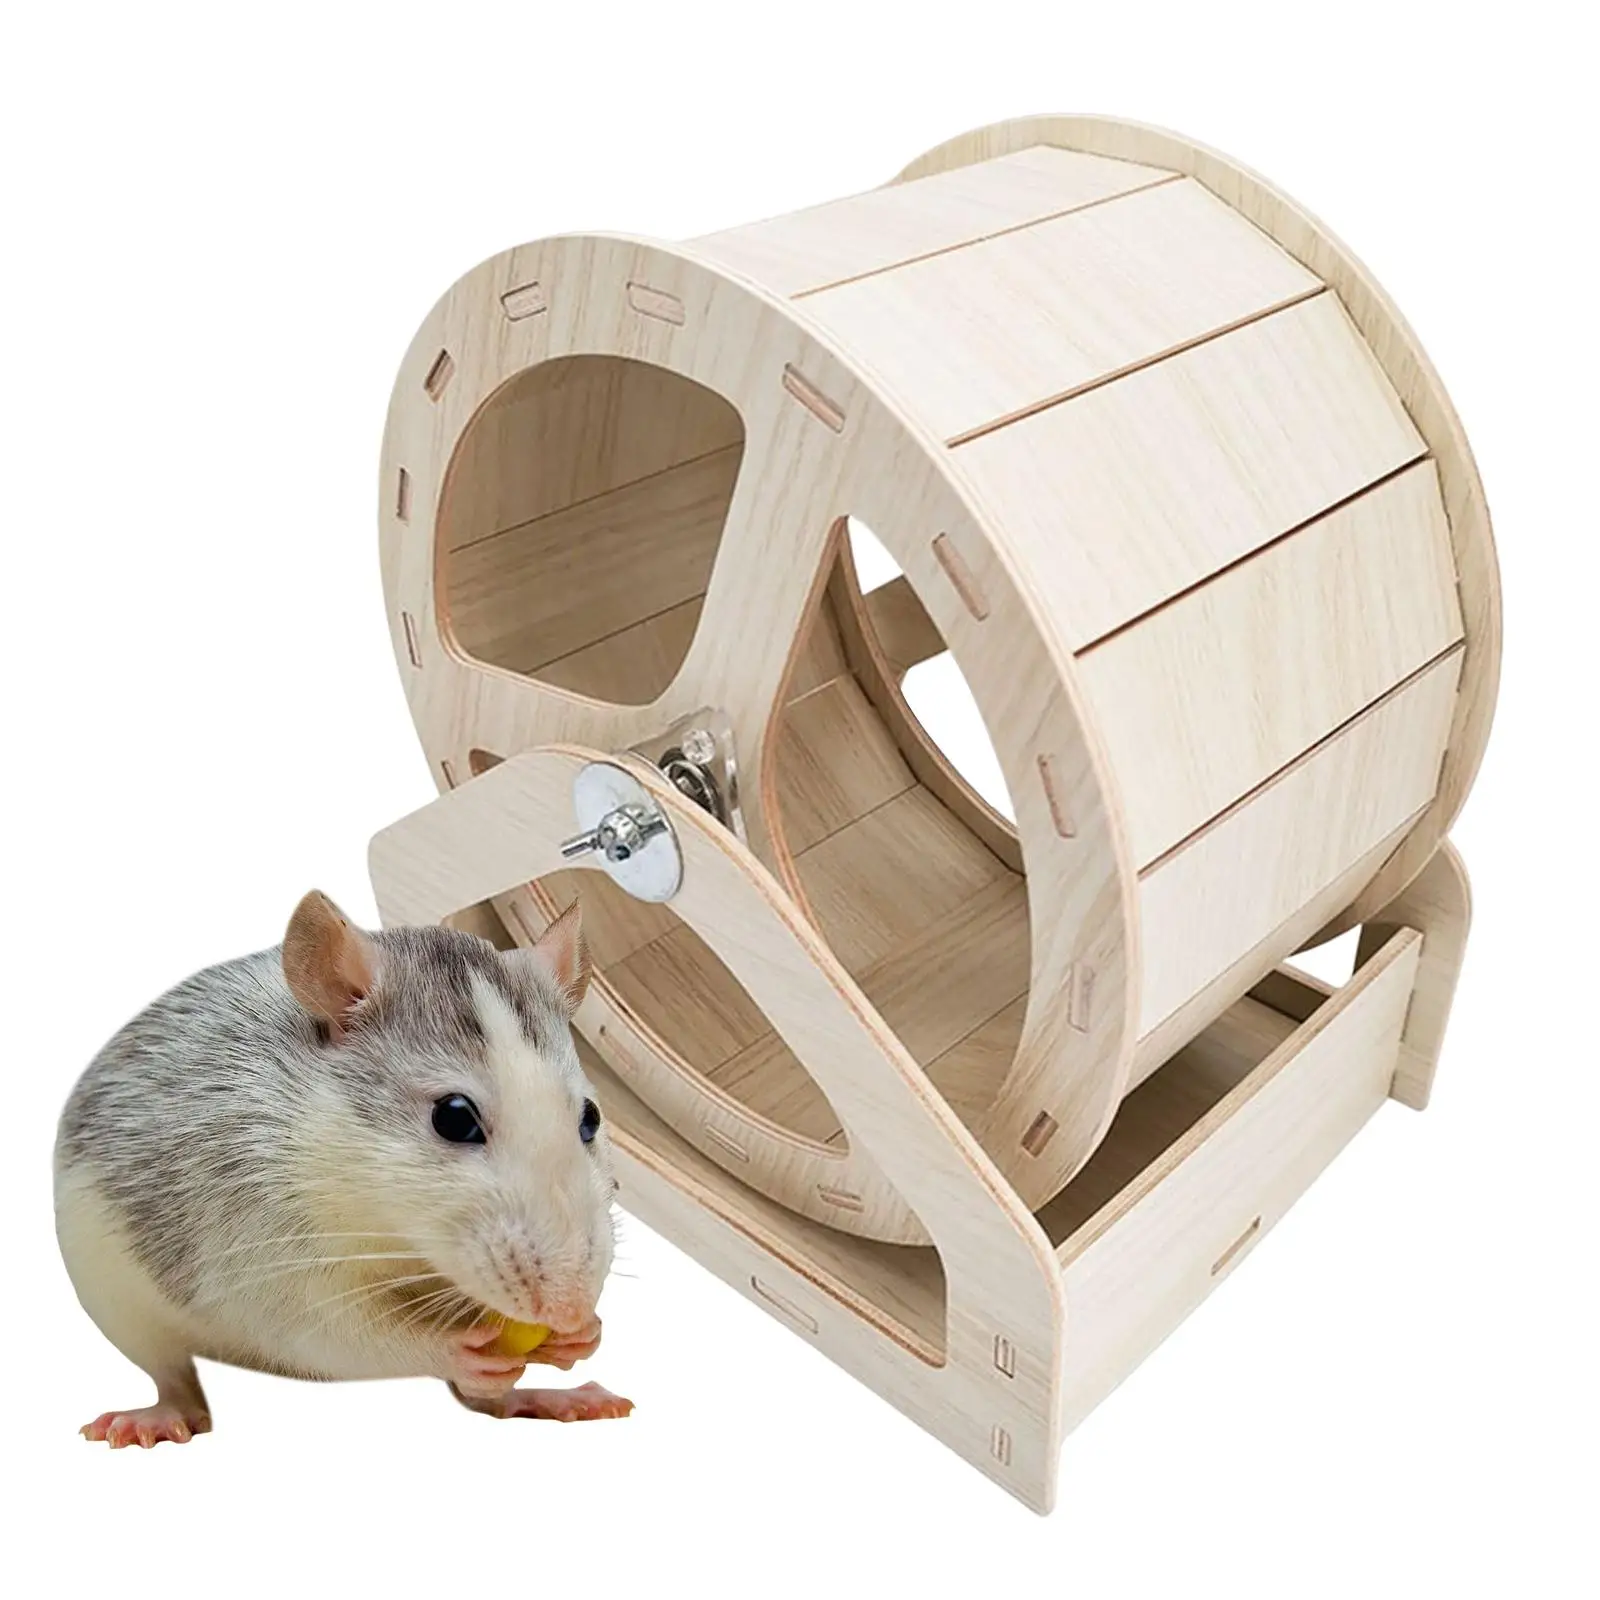 Wooden Hamster Running Wheels Small Pets Sport Wheel Toys Mice Pet Supplies